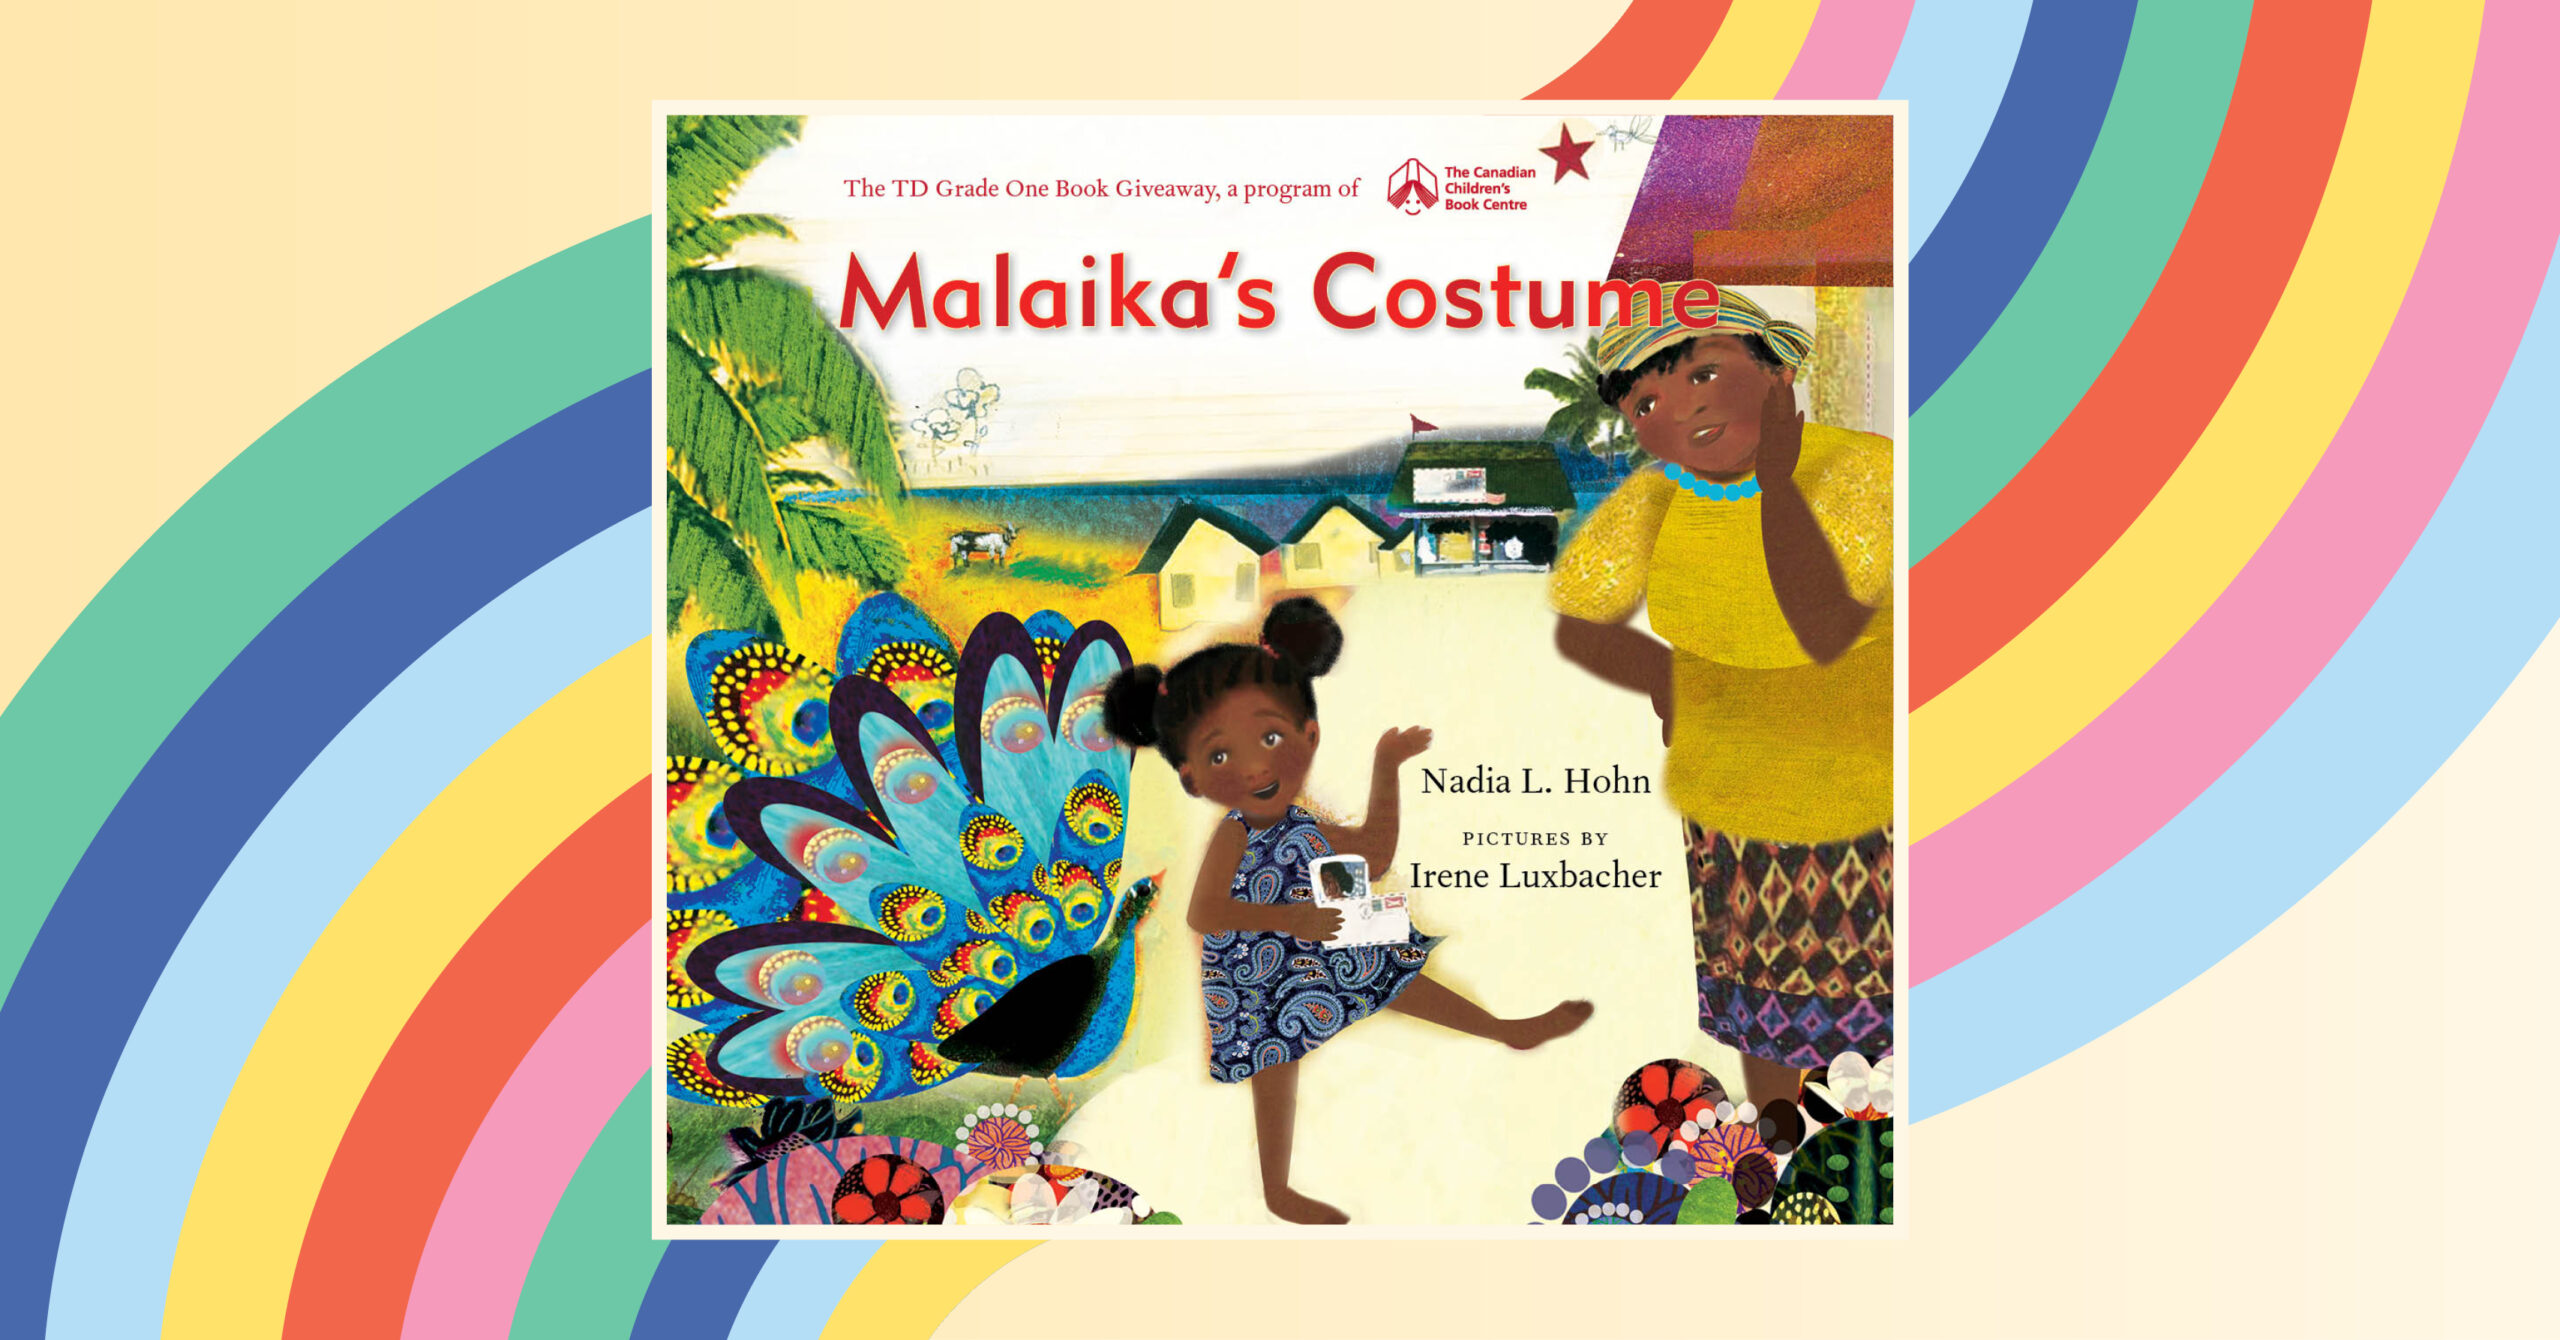 Malaika's Costume event banner